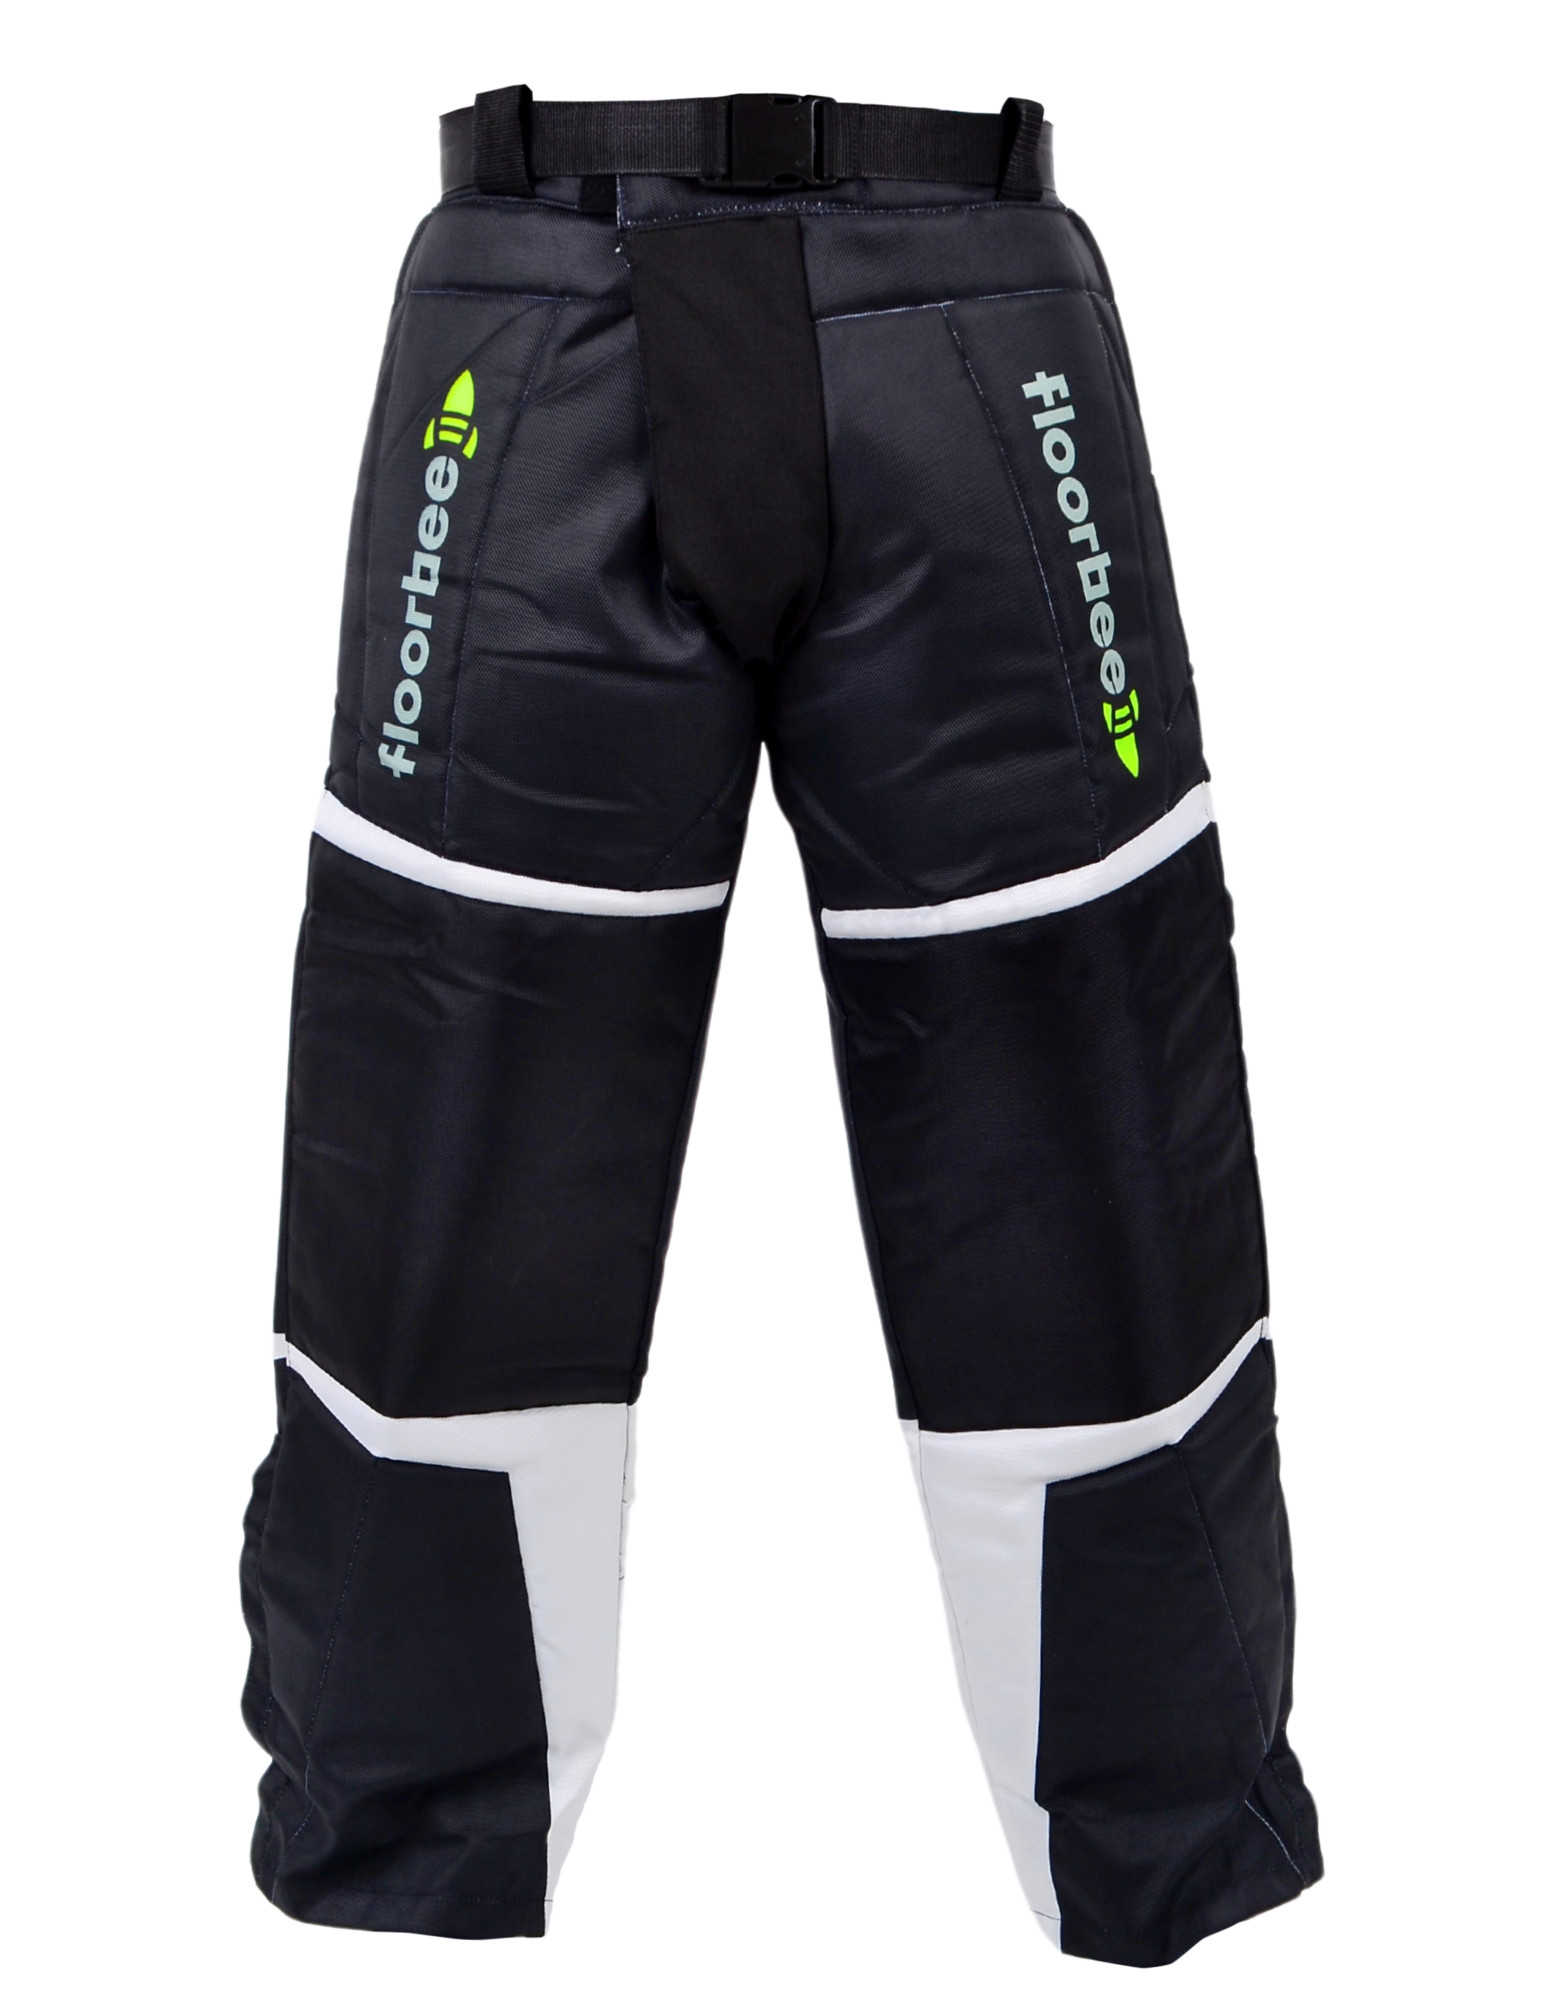 FLOORBEE Goalie Armor Pants 3.0 - black/white L, černá / bílá